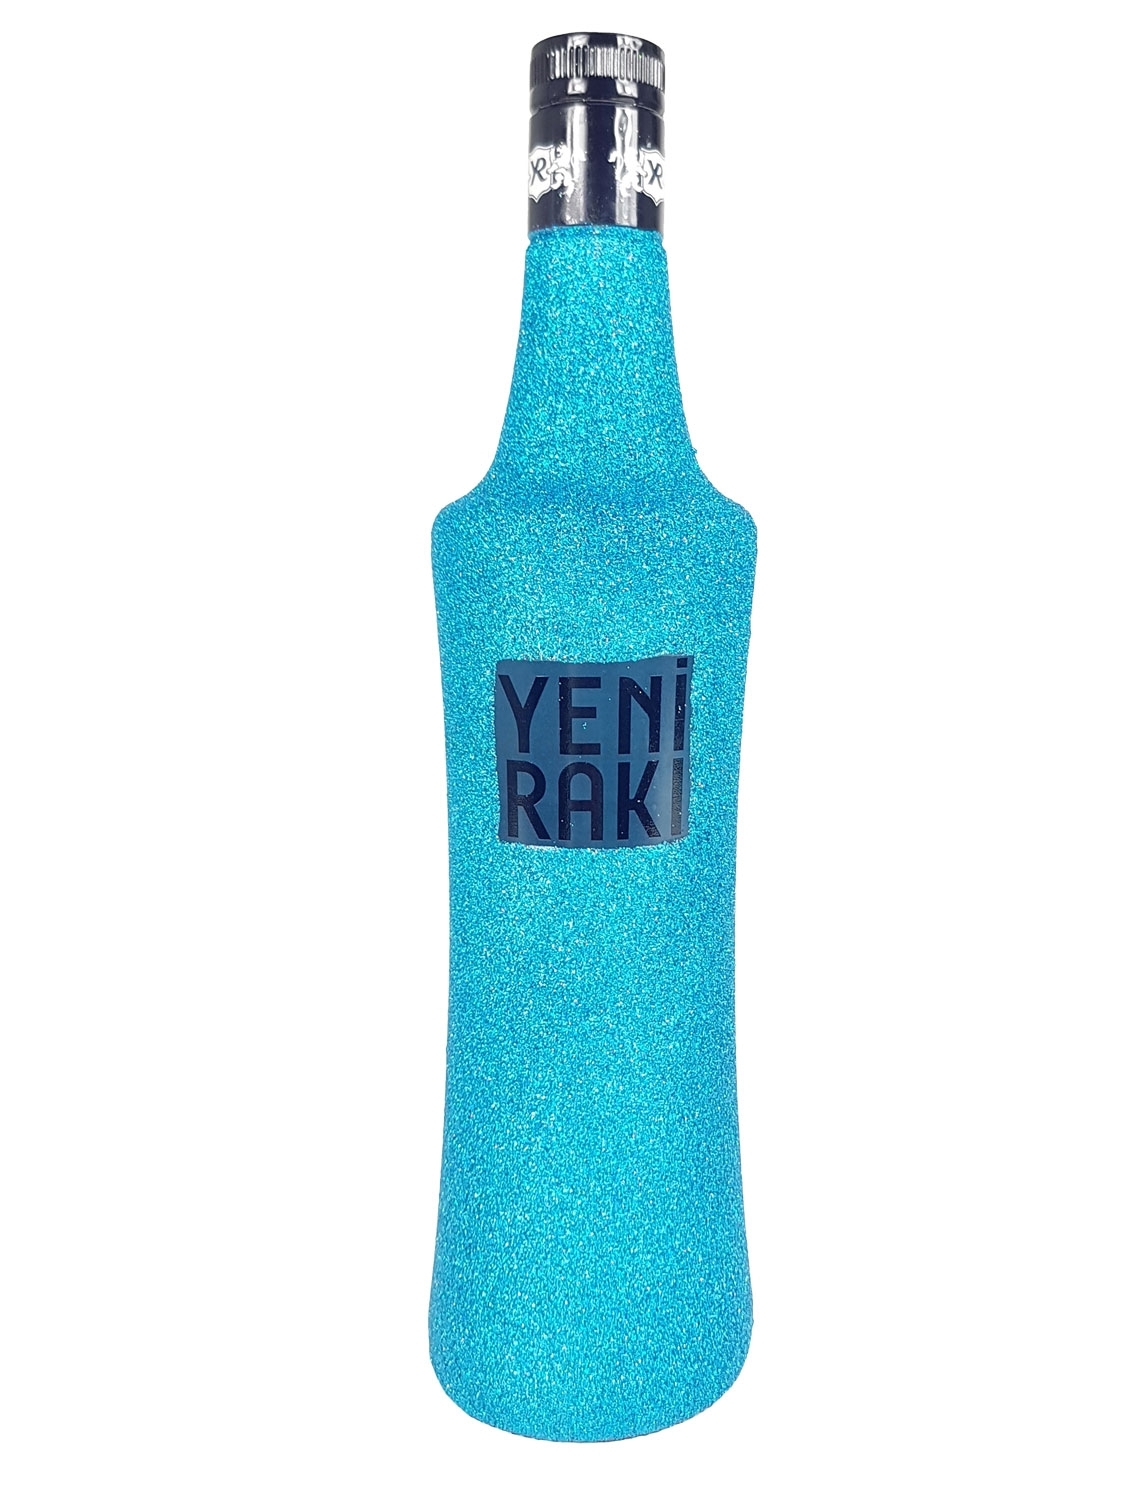 Yeni Raki 0,7l 700ml (45% Vol) Bling Bling Glitzerflasche in blau -[Enthält Sulfite]